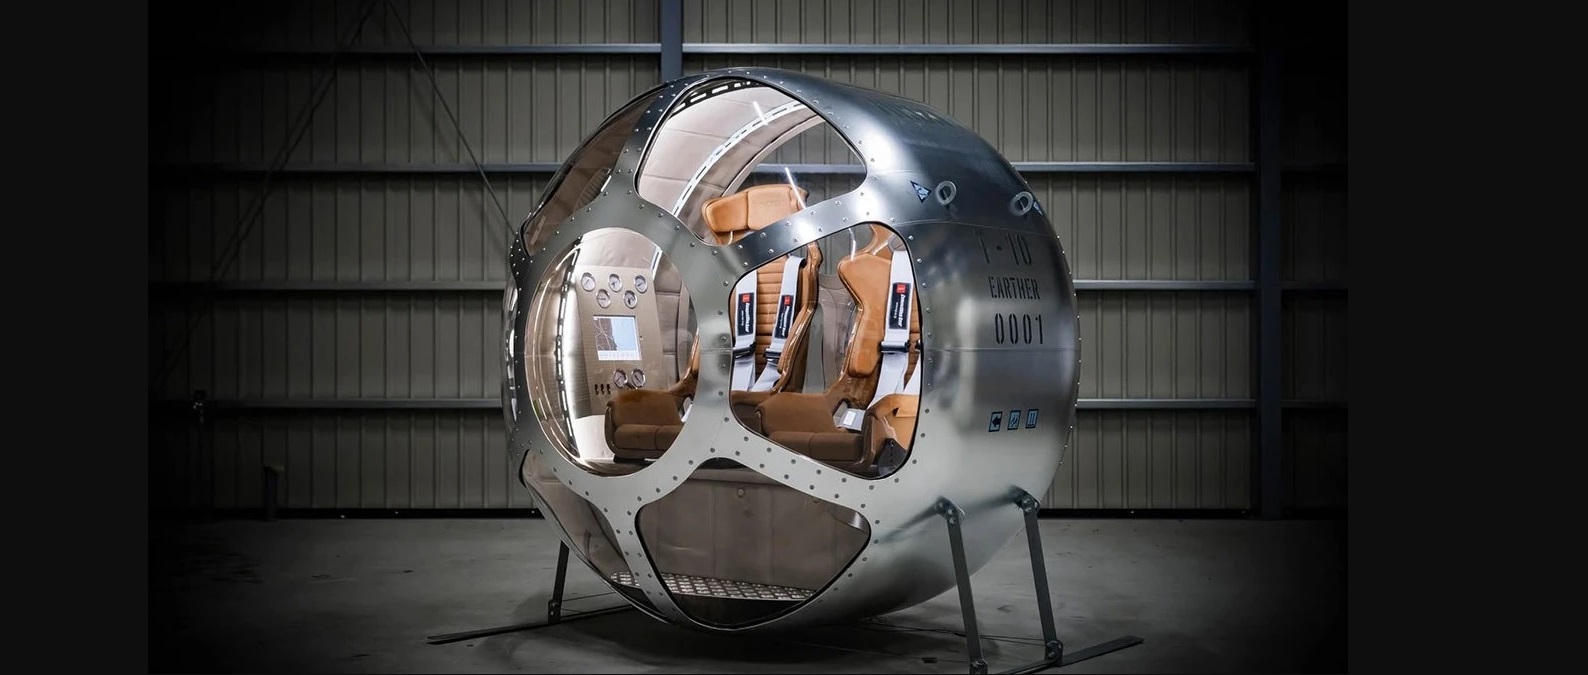 T-10 Earther capsule for Iwaya Giken's Open Universe balloon venture